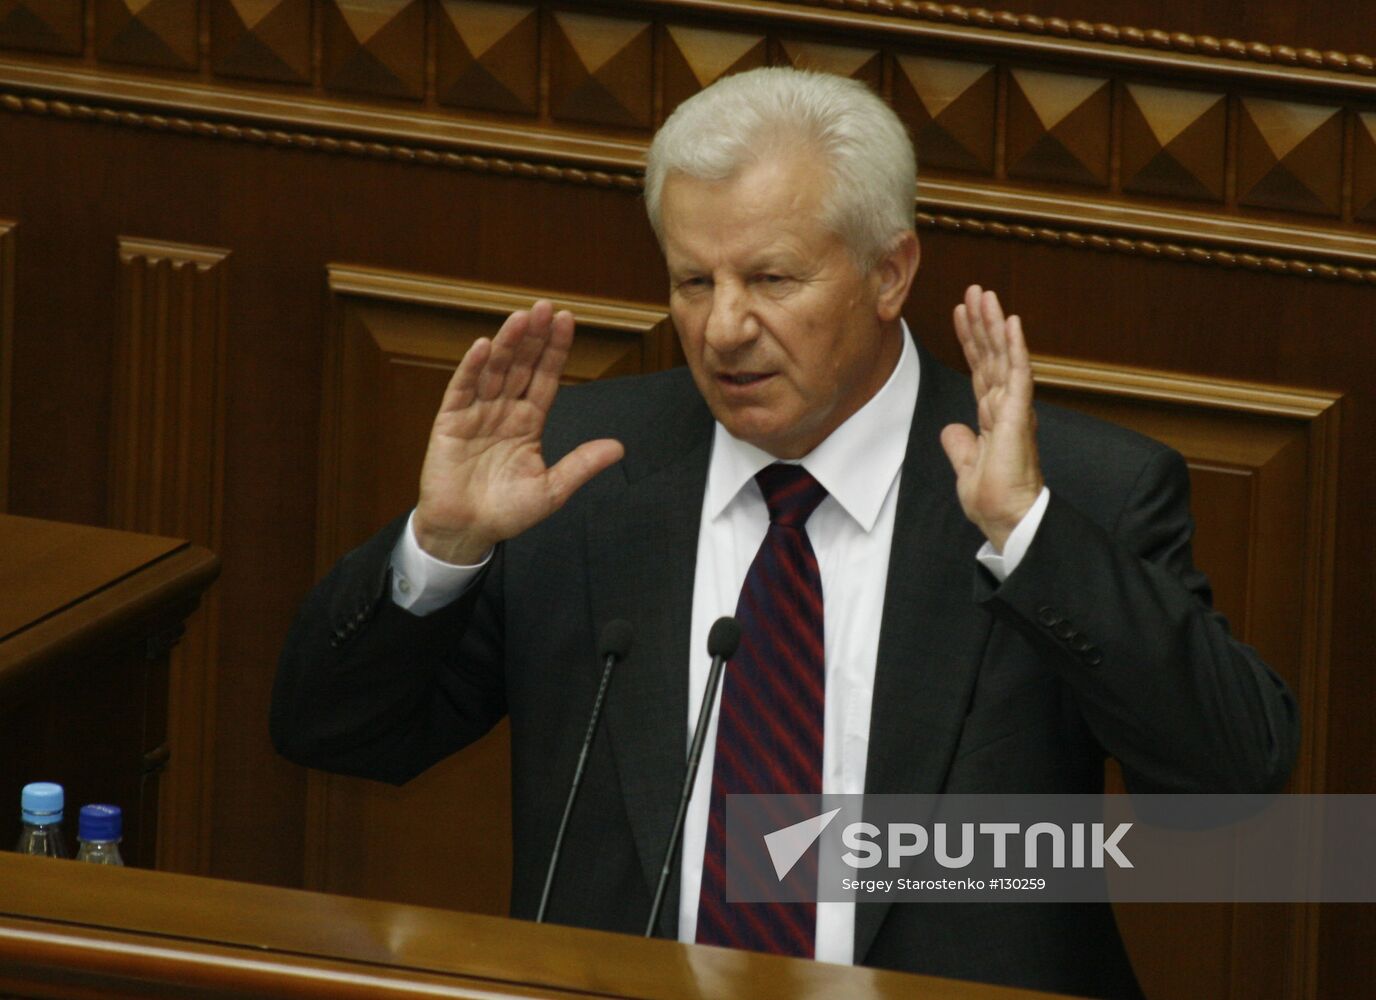 SPEAKER FOR UKRAINE'S SUPREME RADA ELECTED